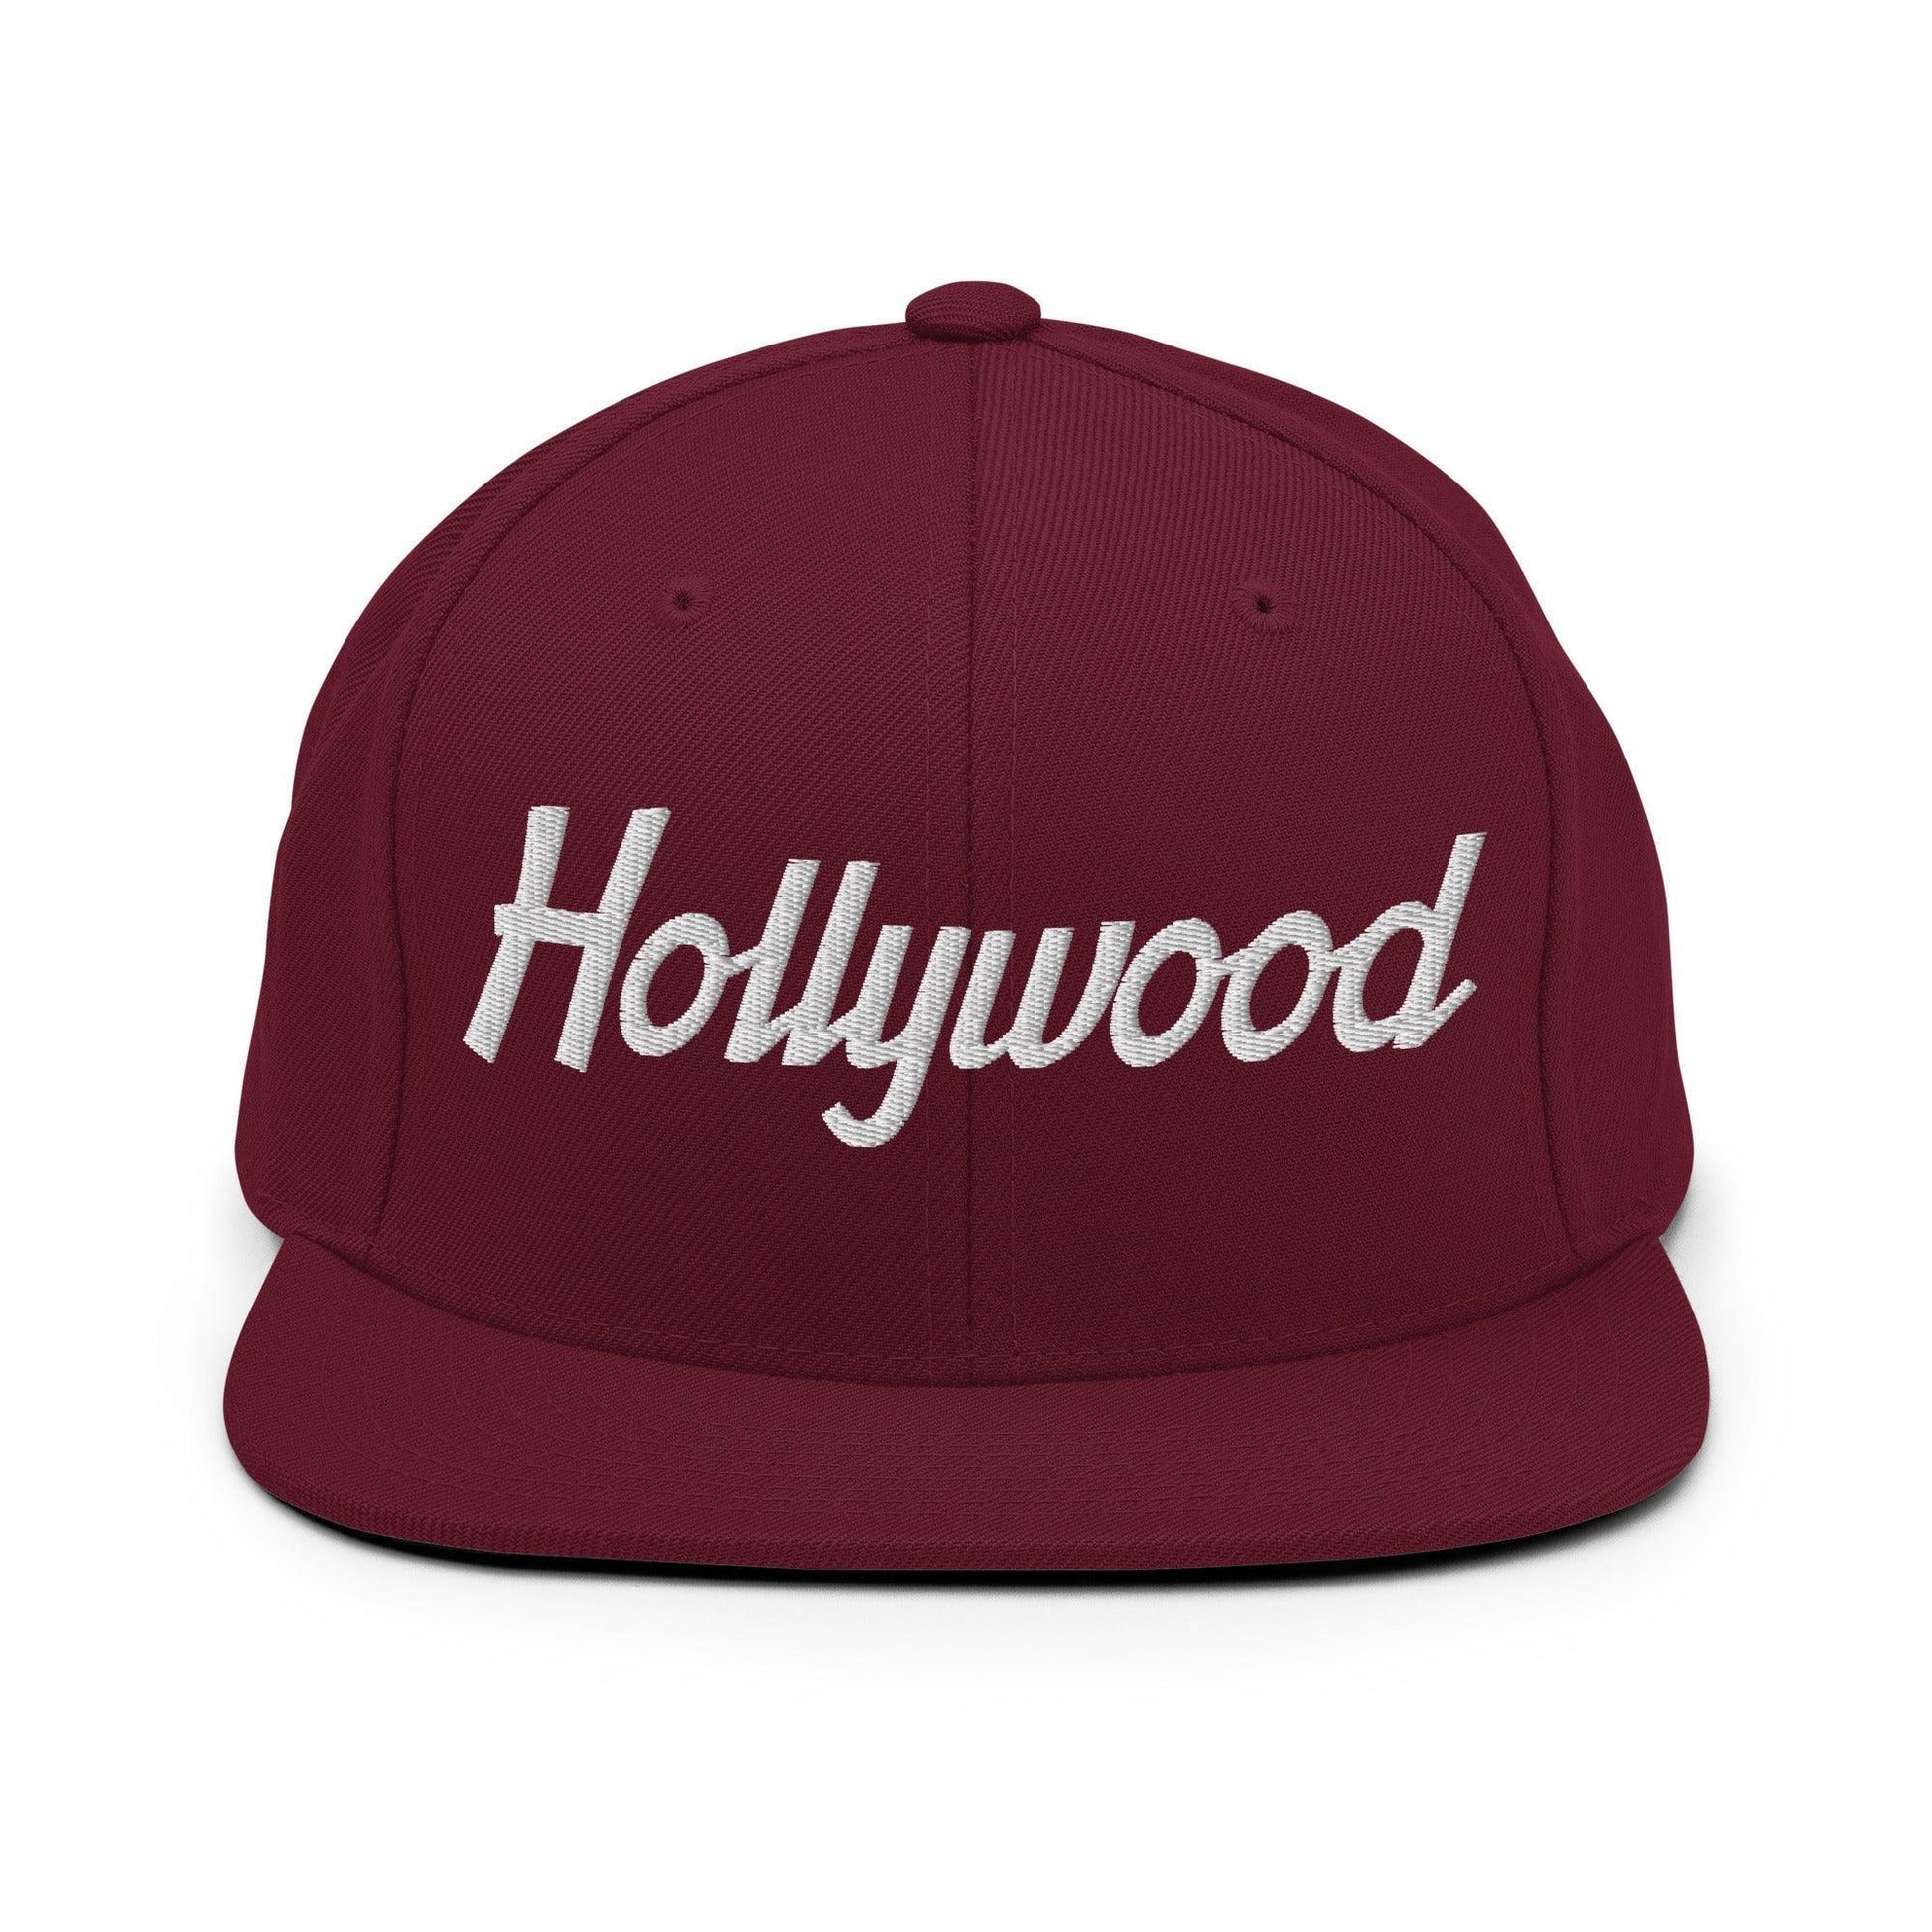 Hollywood Script Snapback Hat Maroon